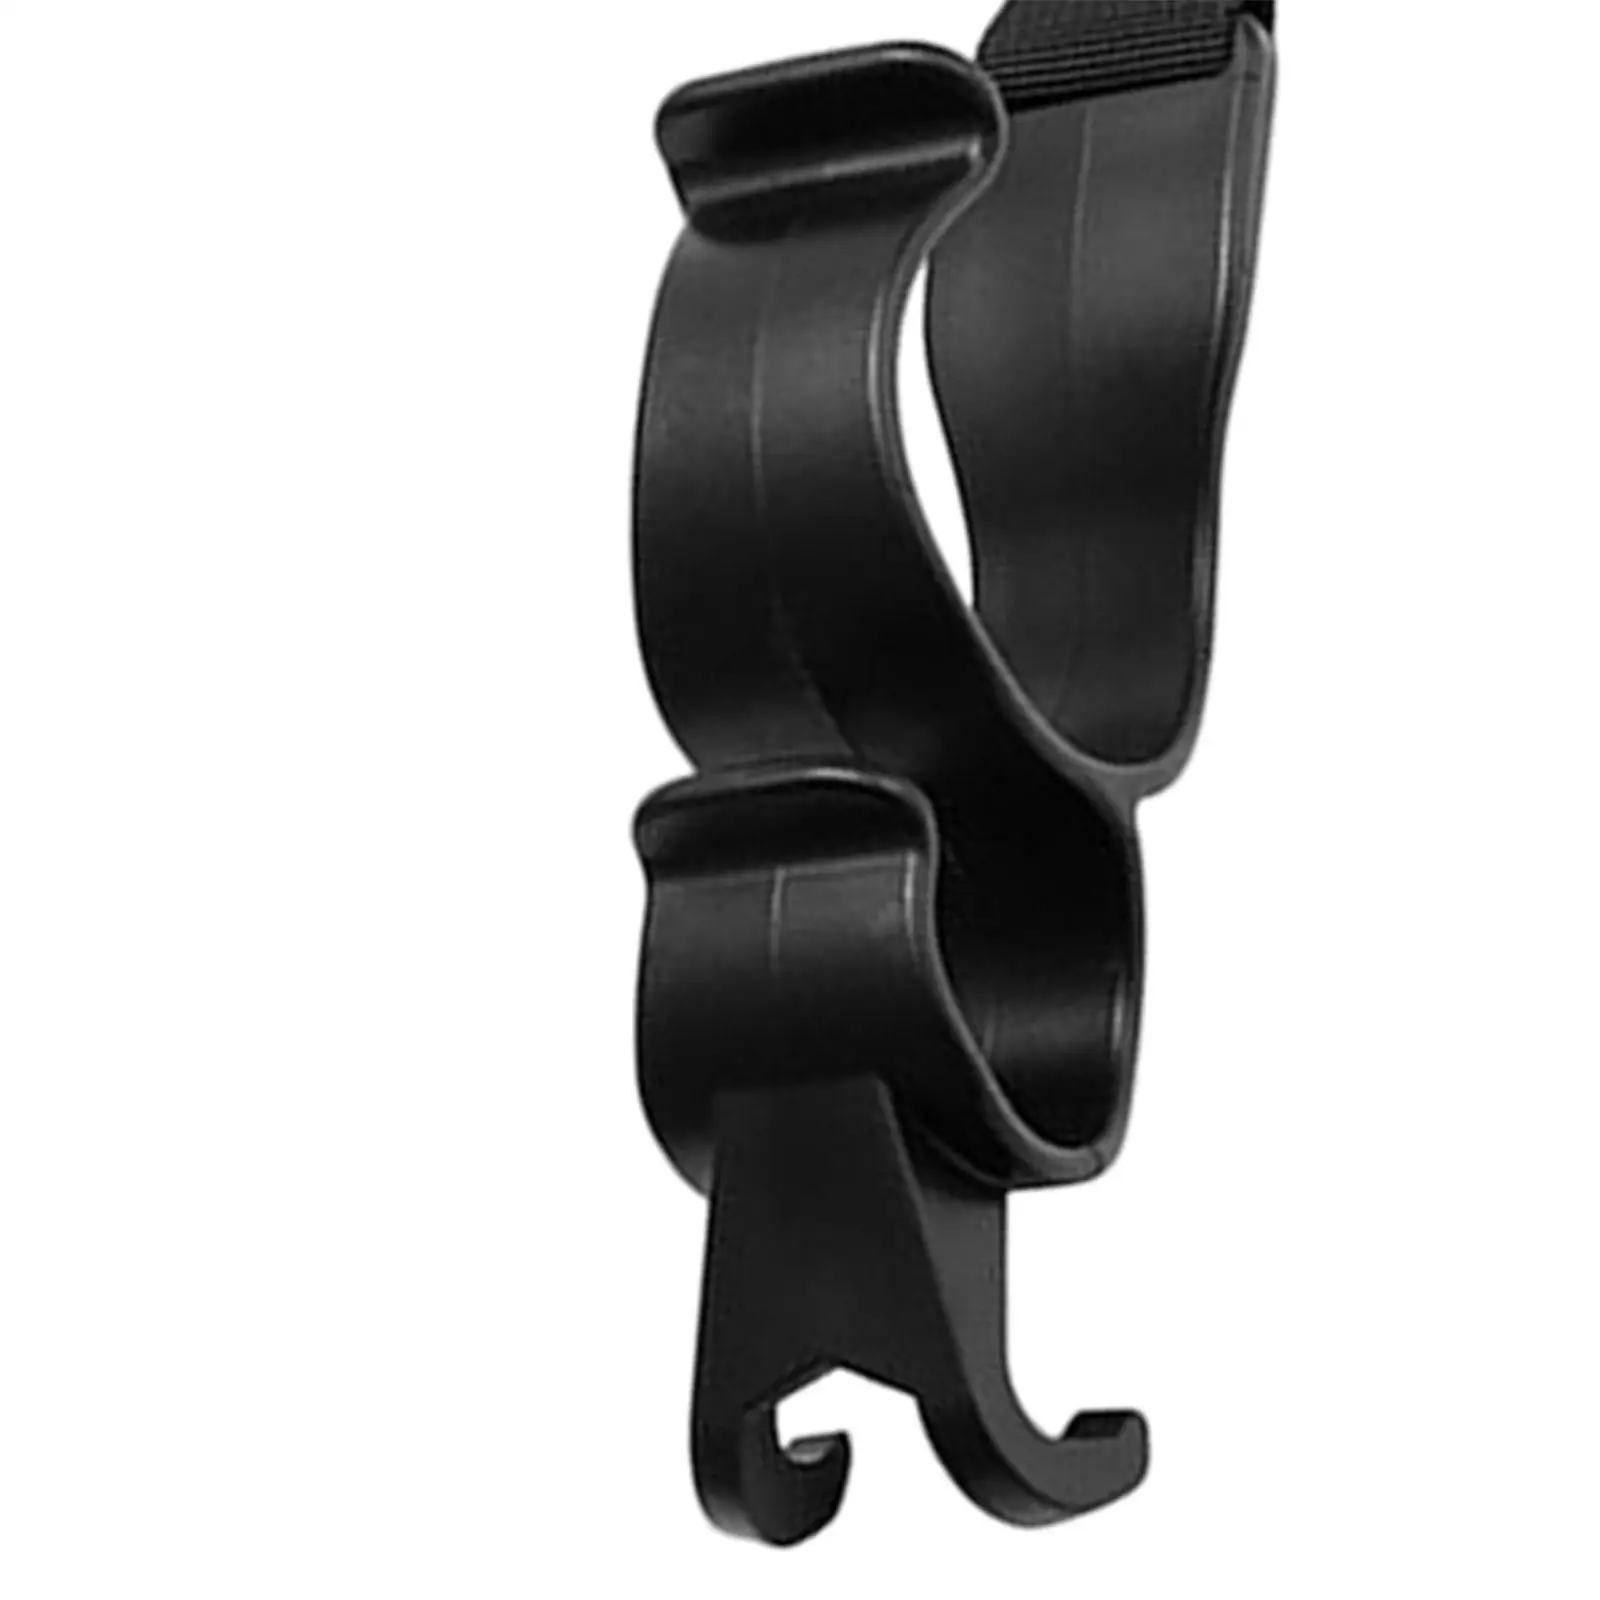 2x Car Headrest Hooks Storage Organizer Headrest Hanger Hook for Grocery Bags